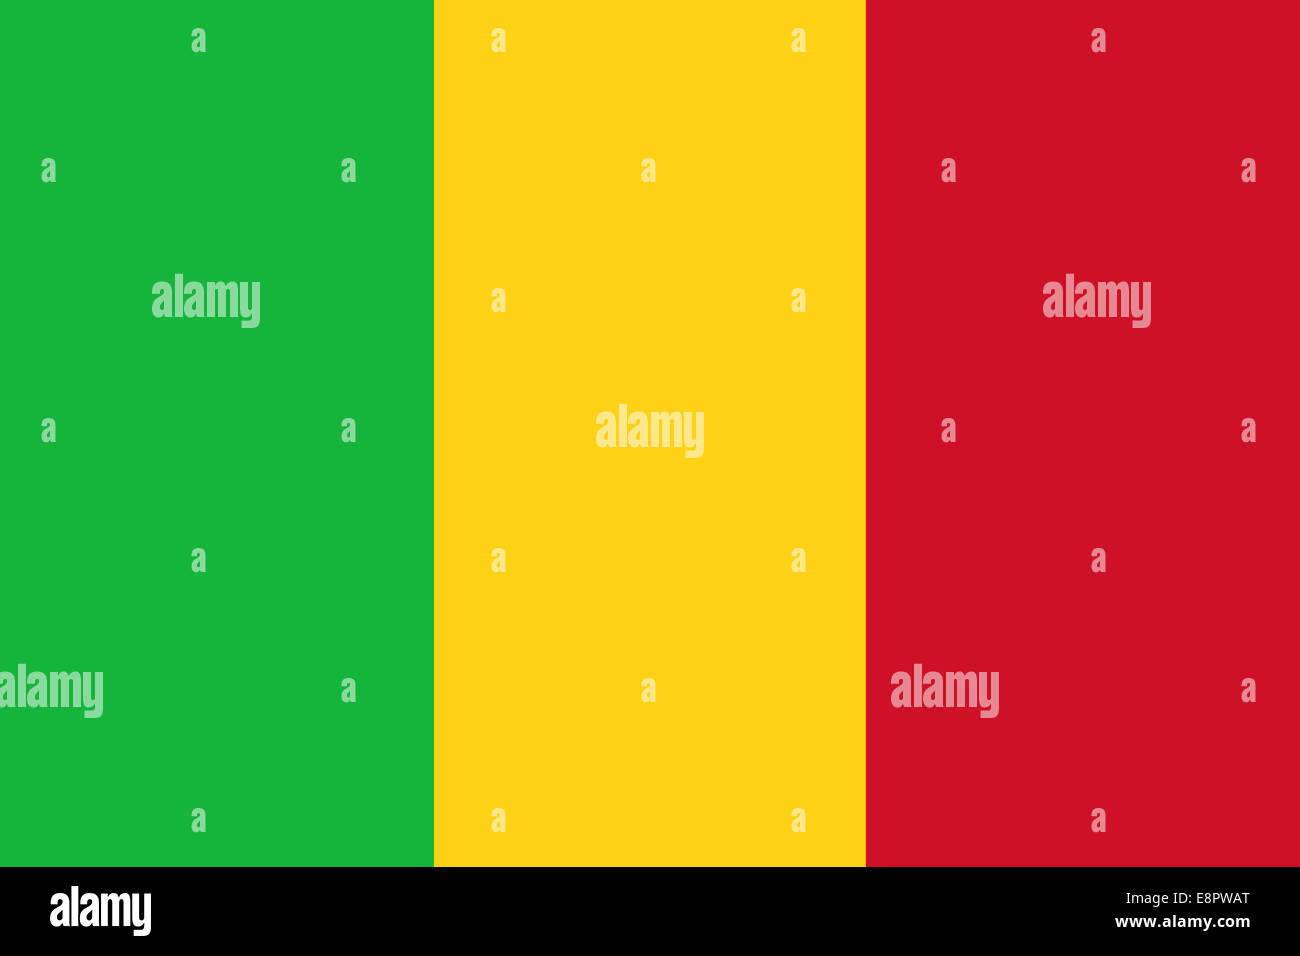 Flag of Mali - Mali flag standard ratio - true RGB color mode Stock Photo